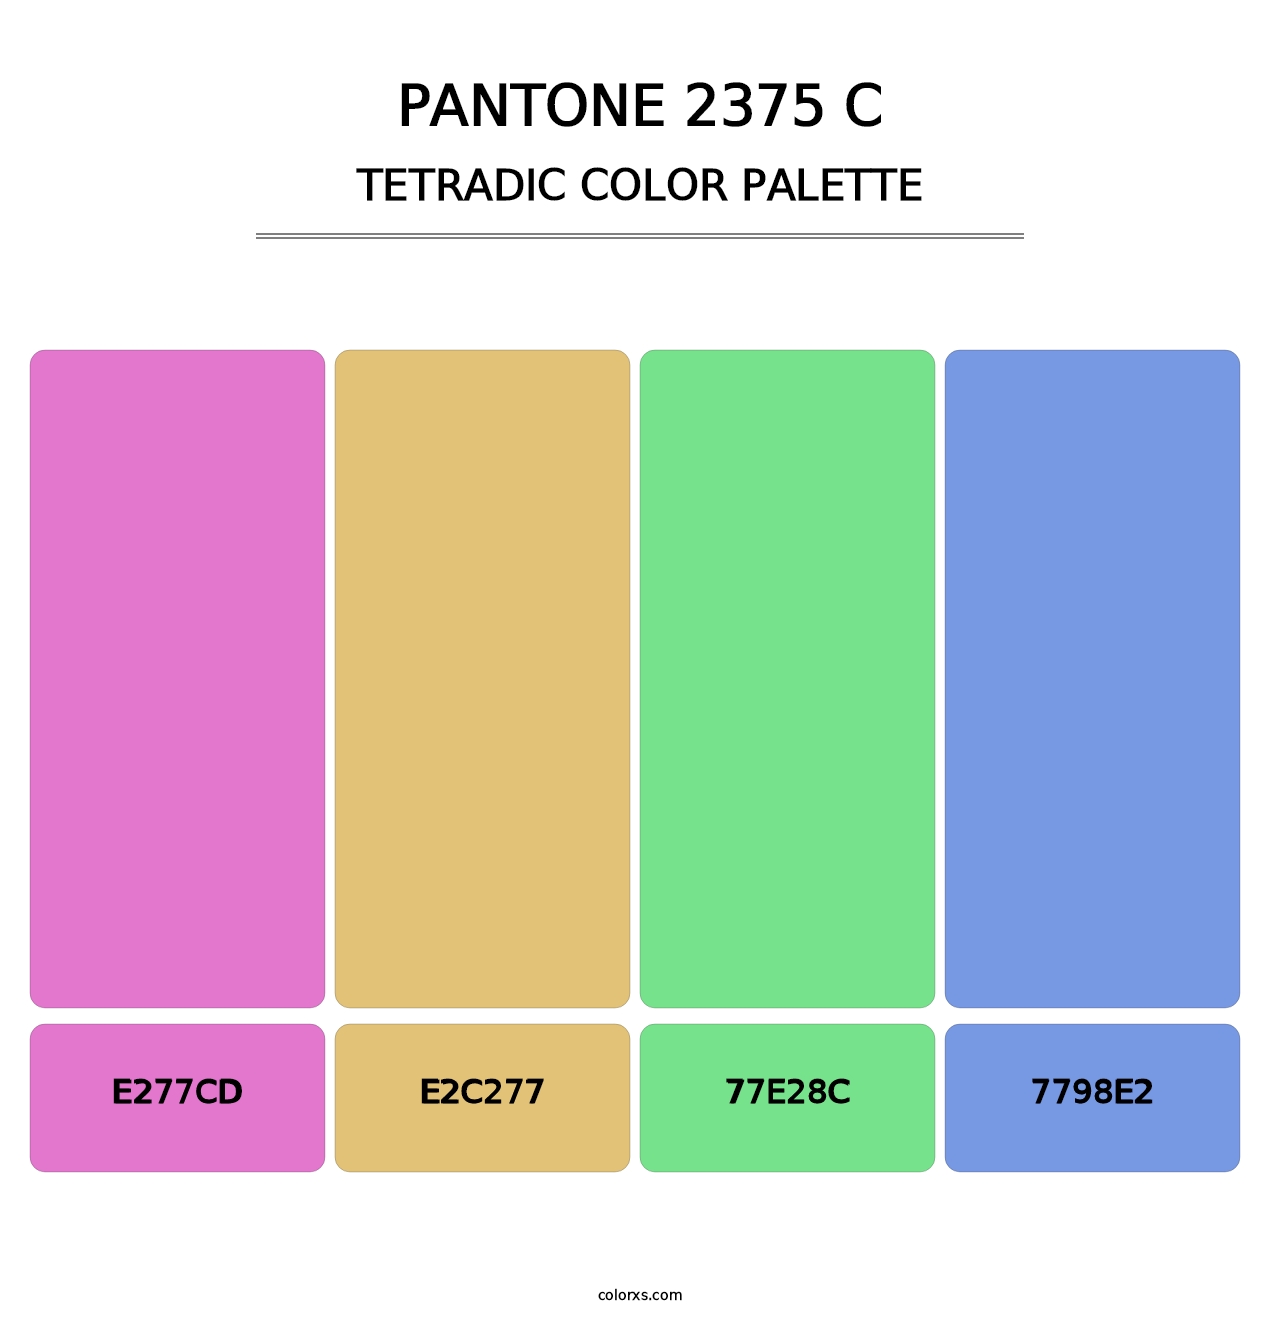 PANTONE 2375 C - Tetradic Color Palette